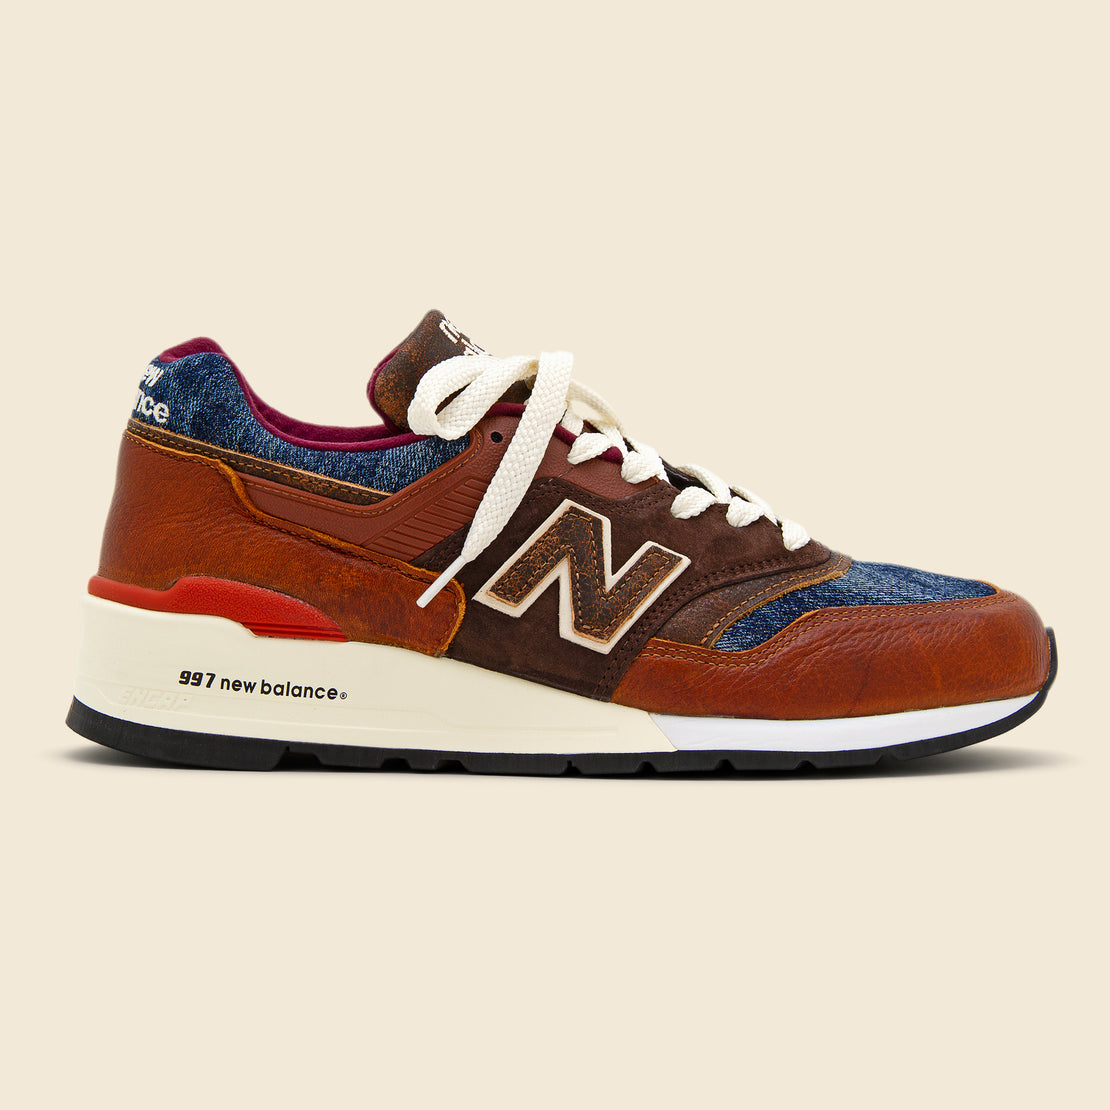 New Balance 997 Sneaker - Brown/Blue